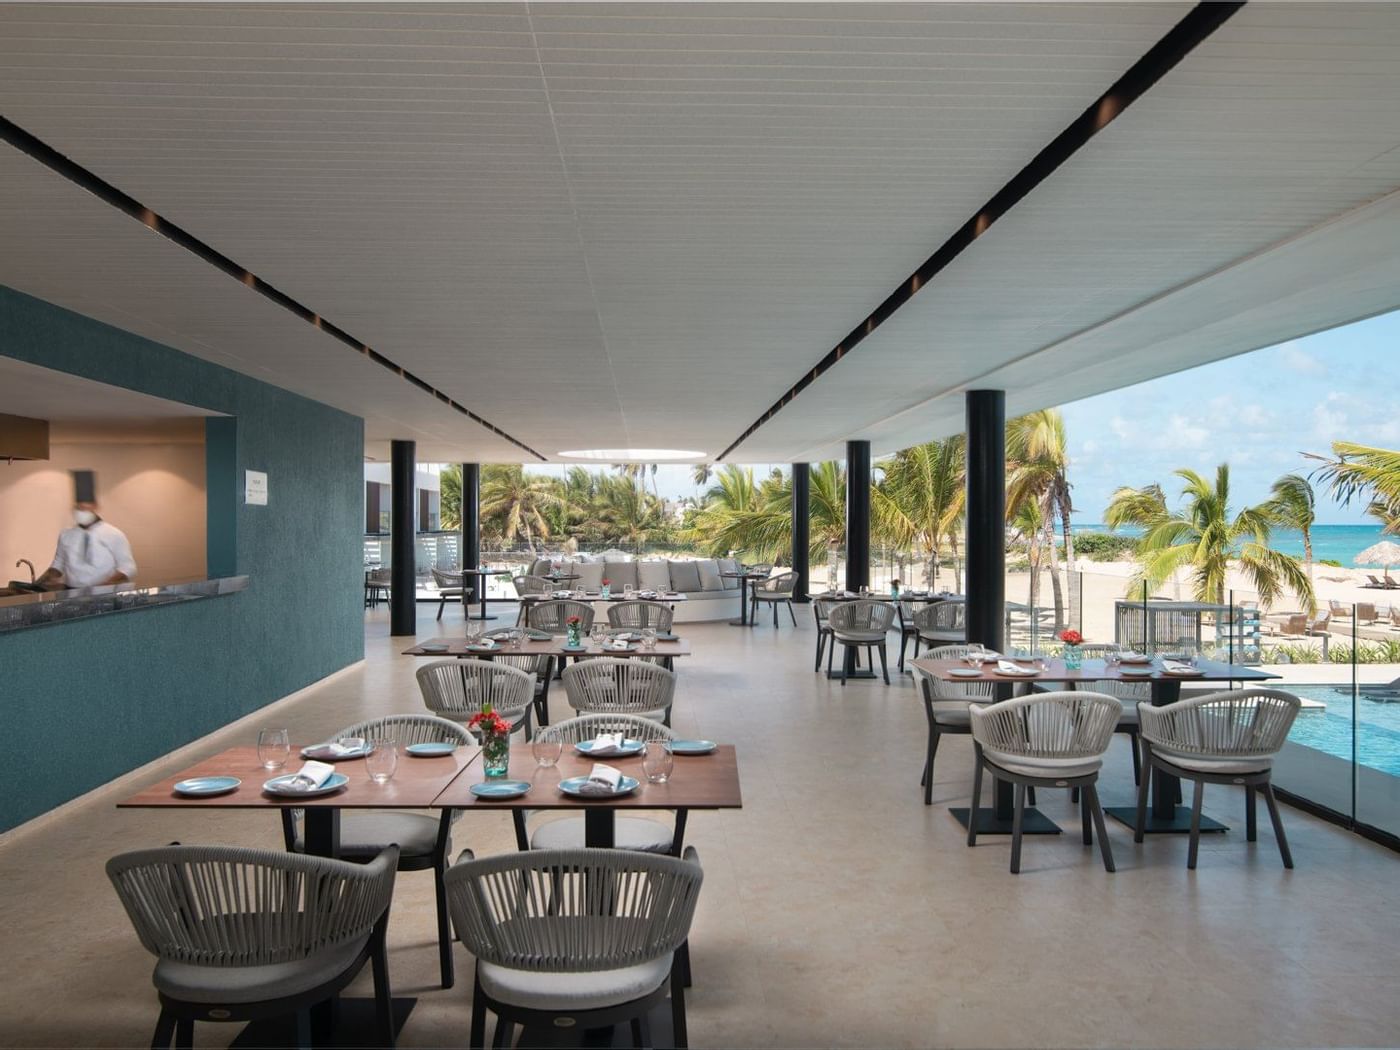 Huzur dining for groups at Live Aqua Beach Resort Punta Cana